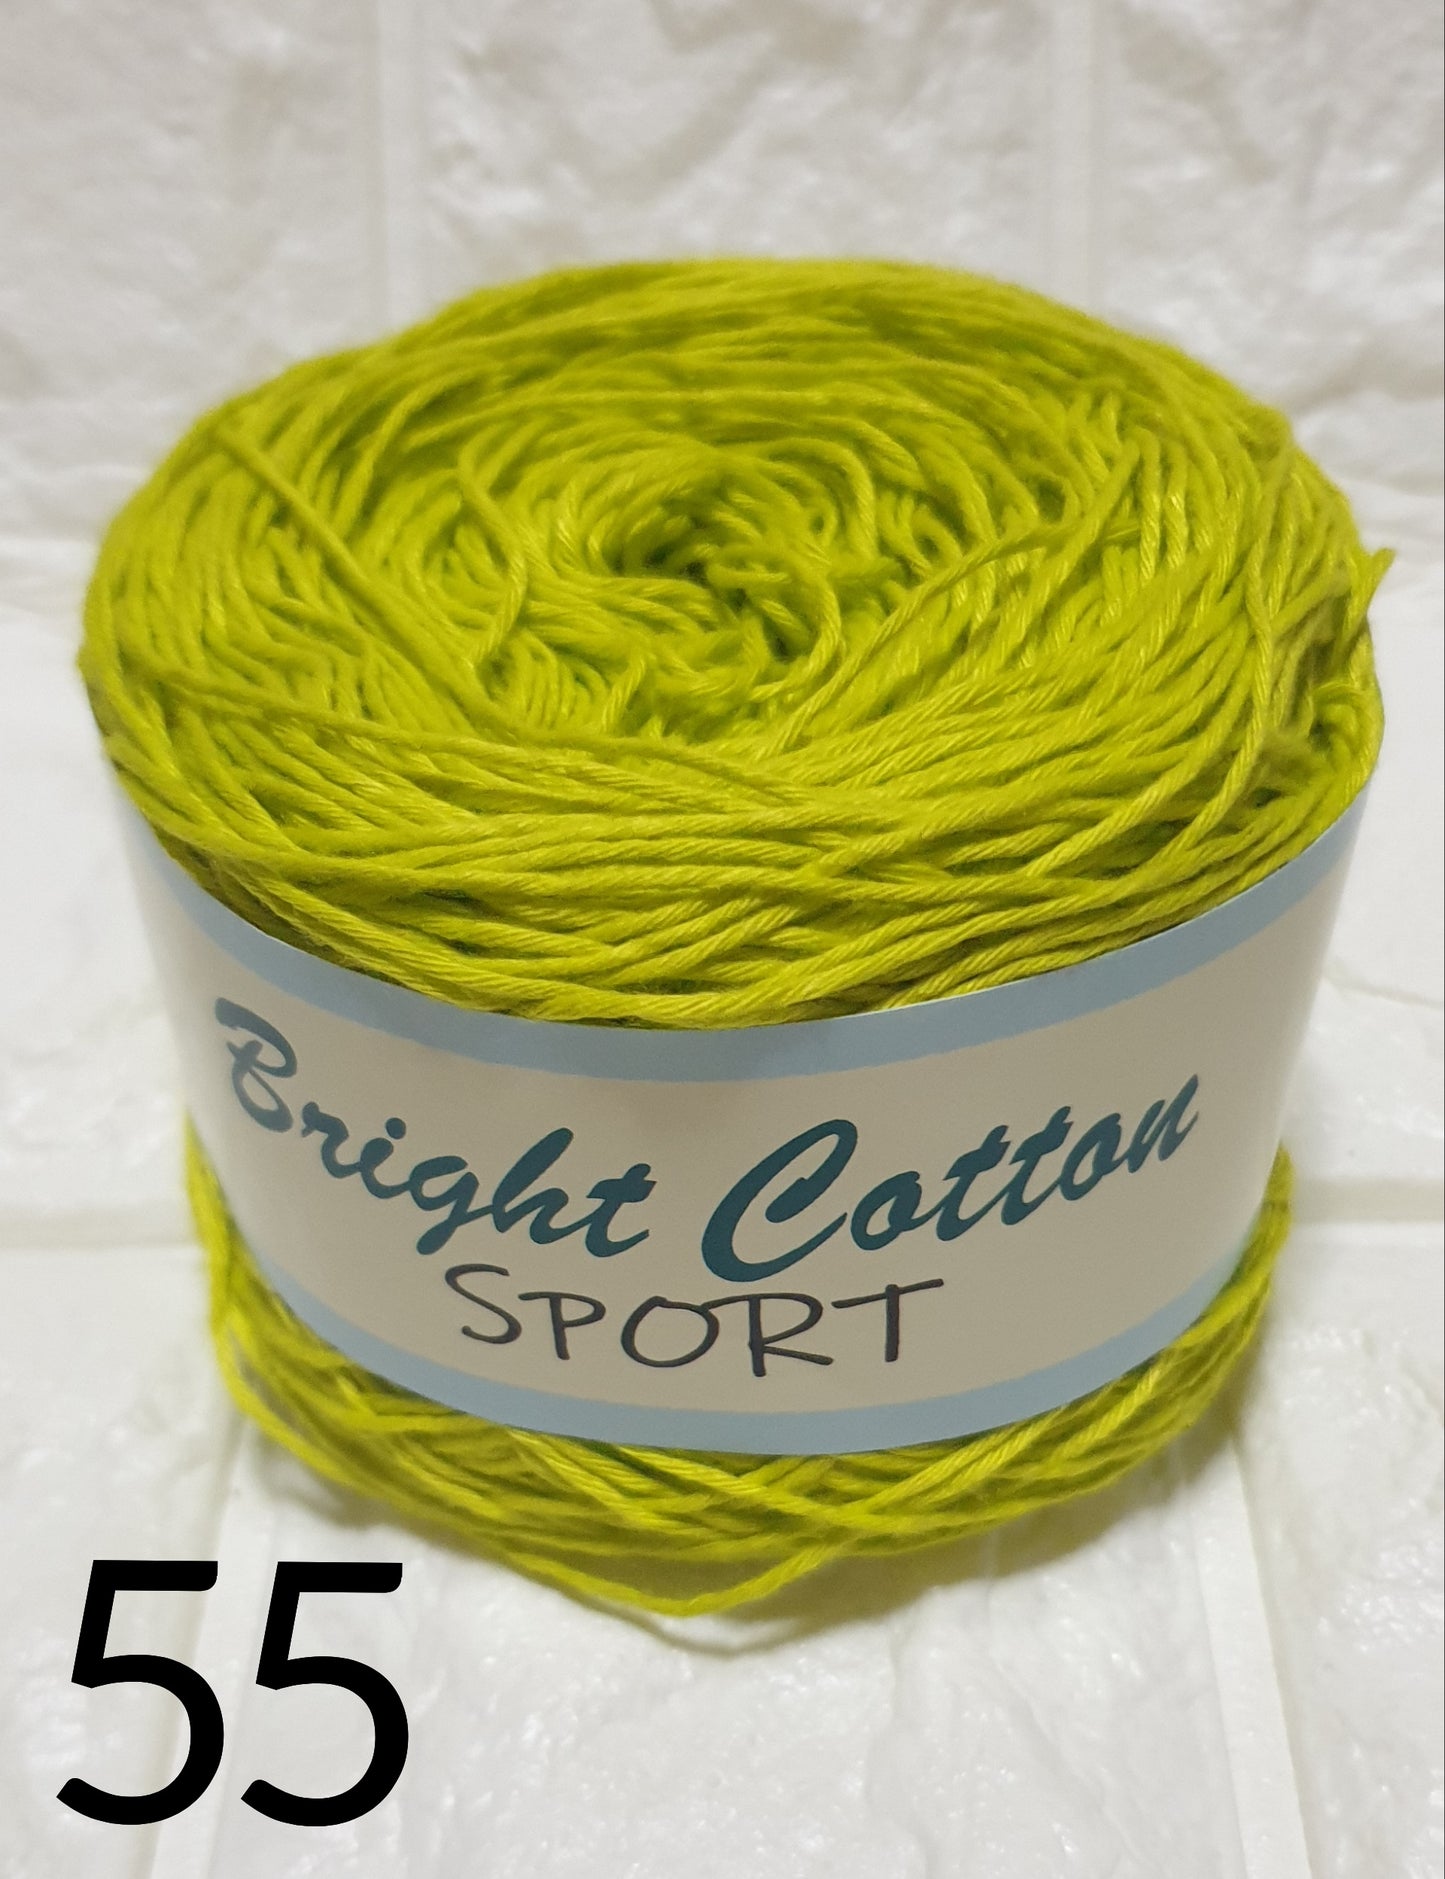 Bright Cotton Sport Size 100g